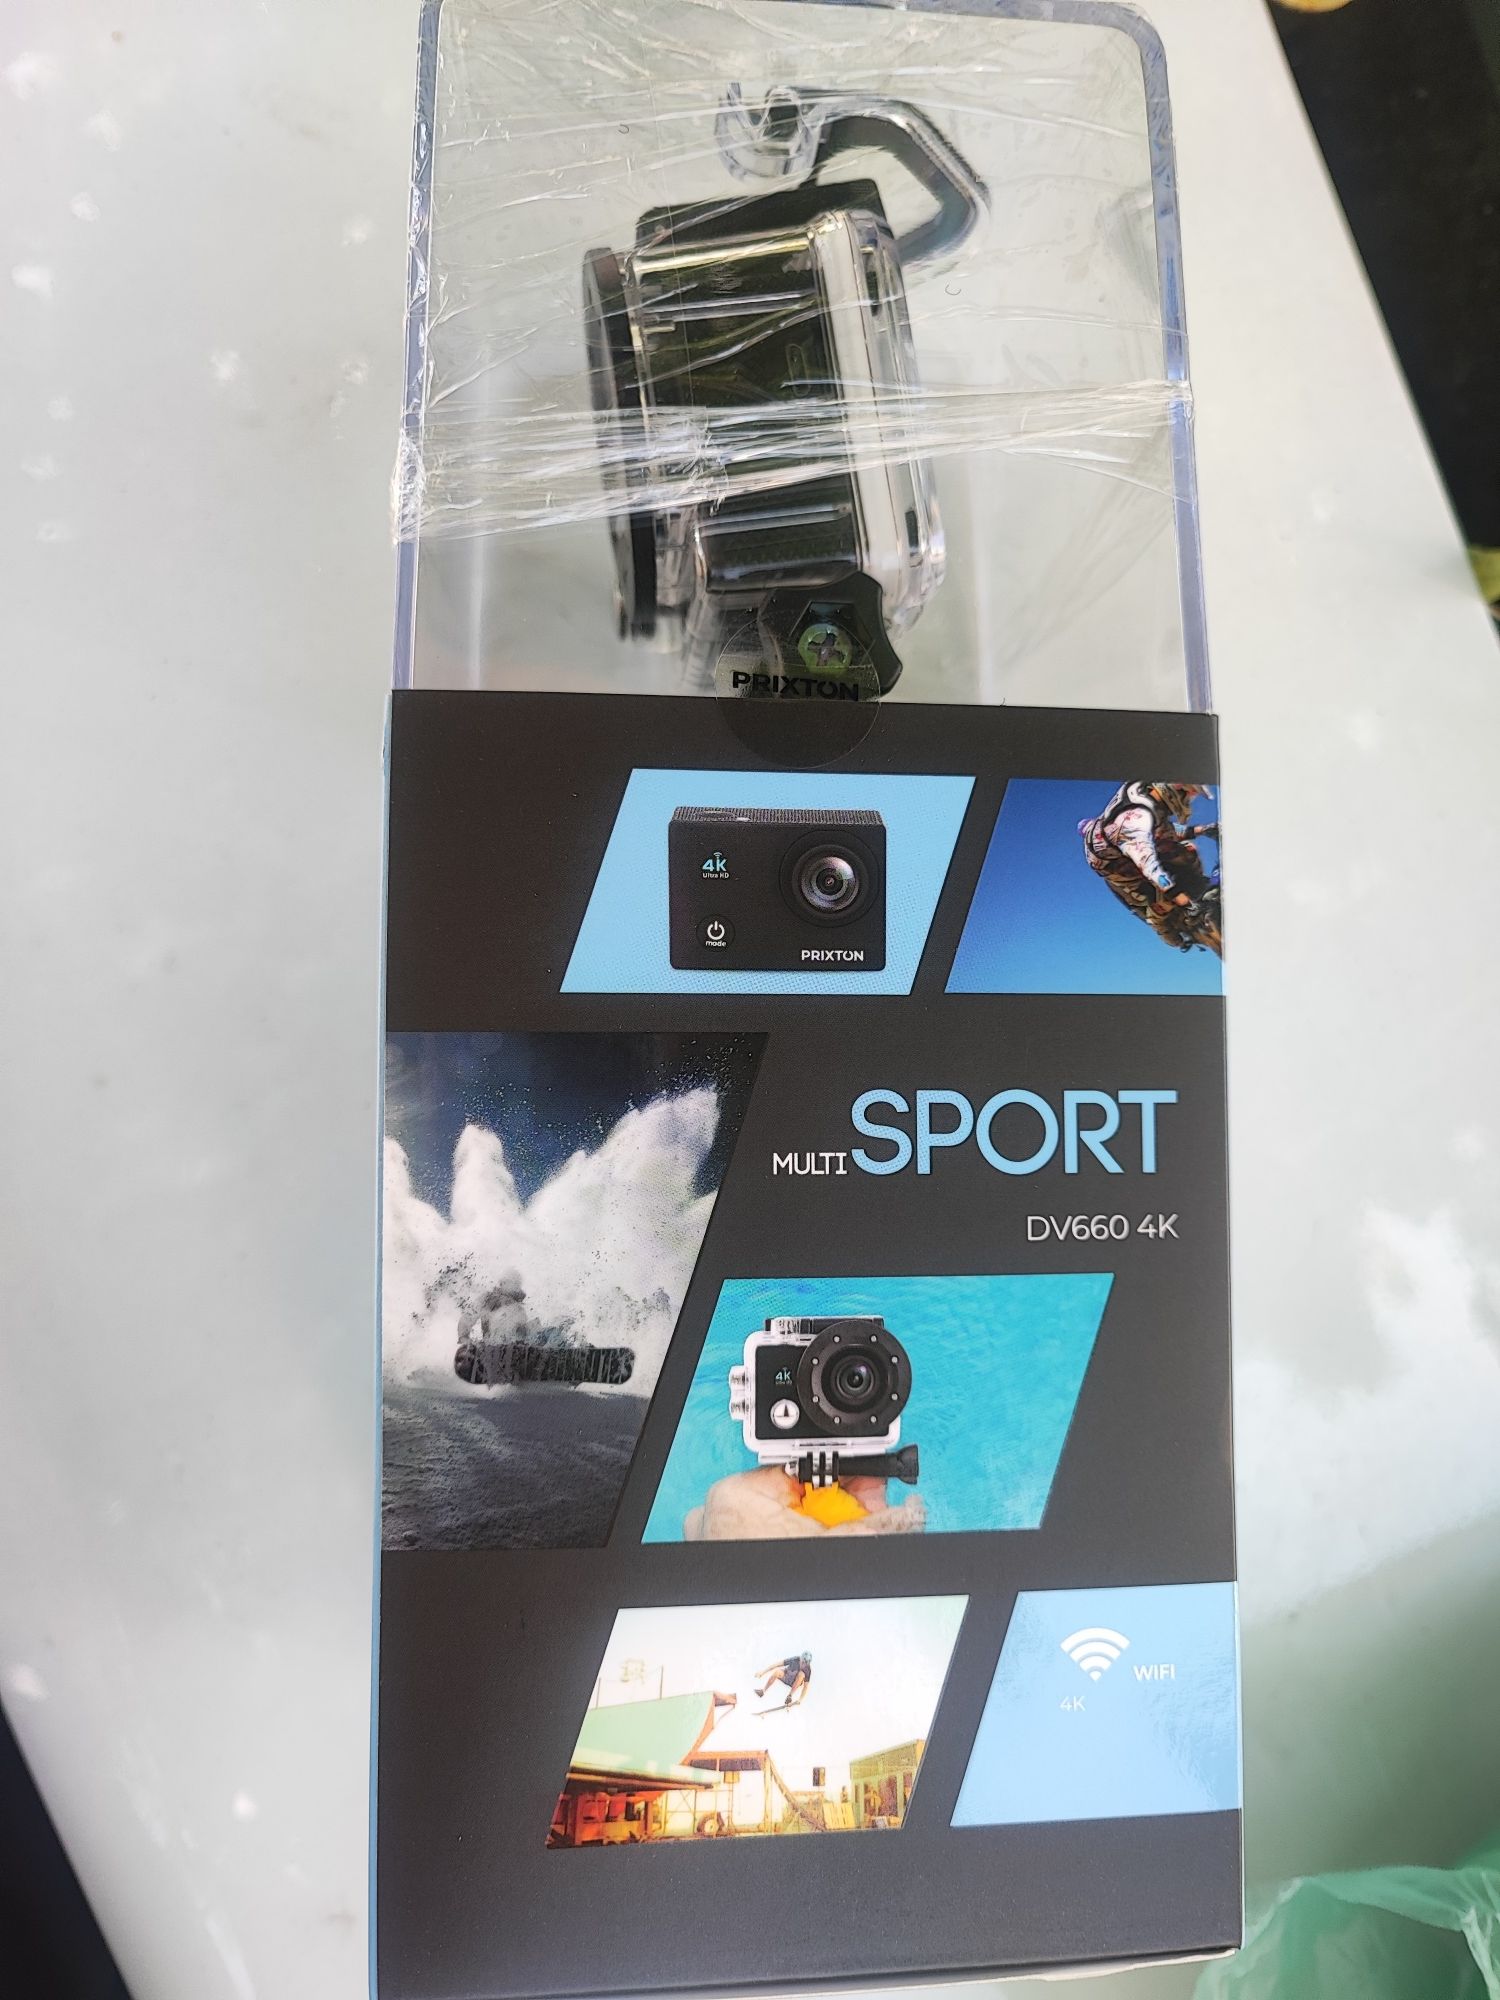 Camera Video Prixton multisport DV660 4k Wifi